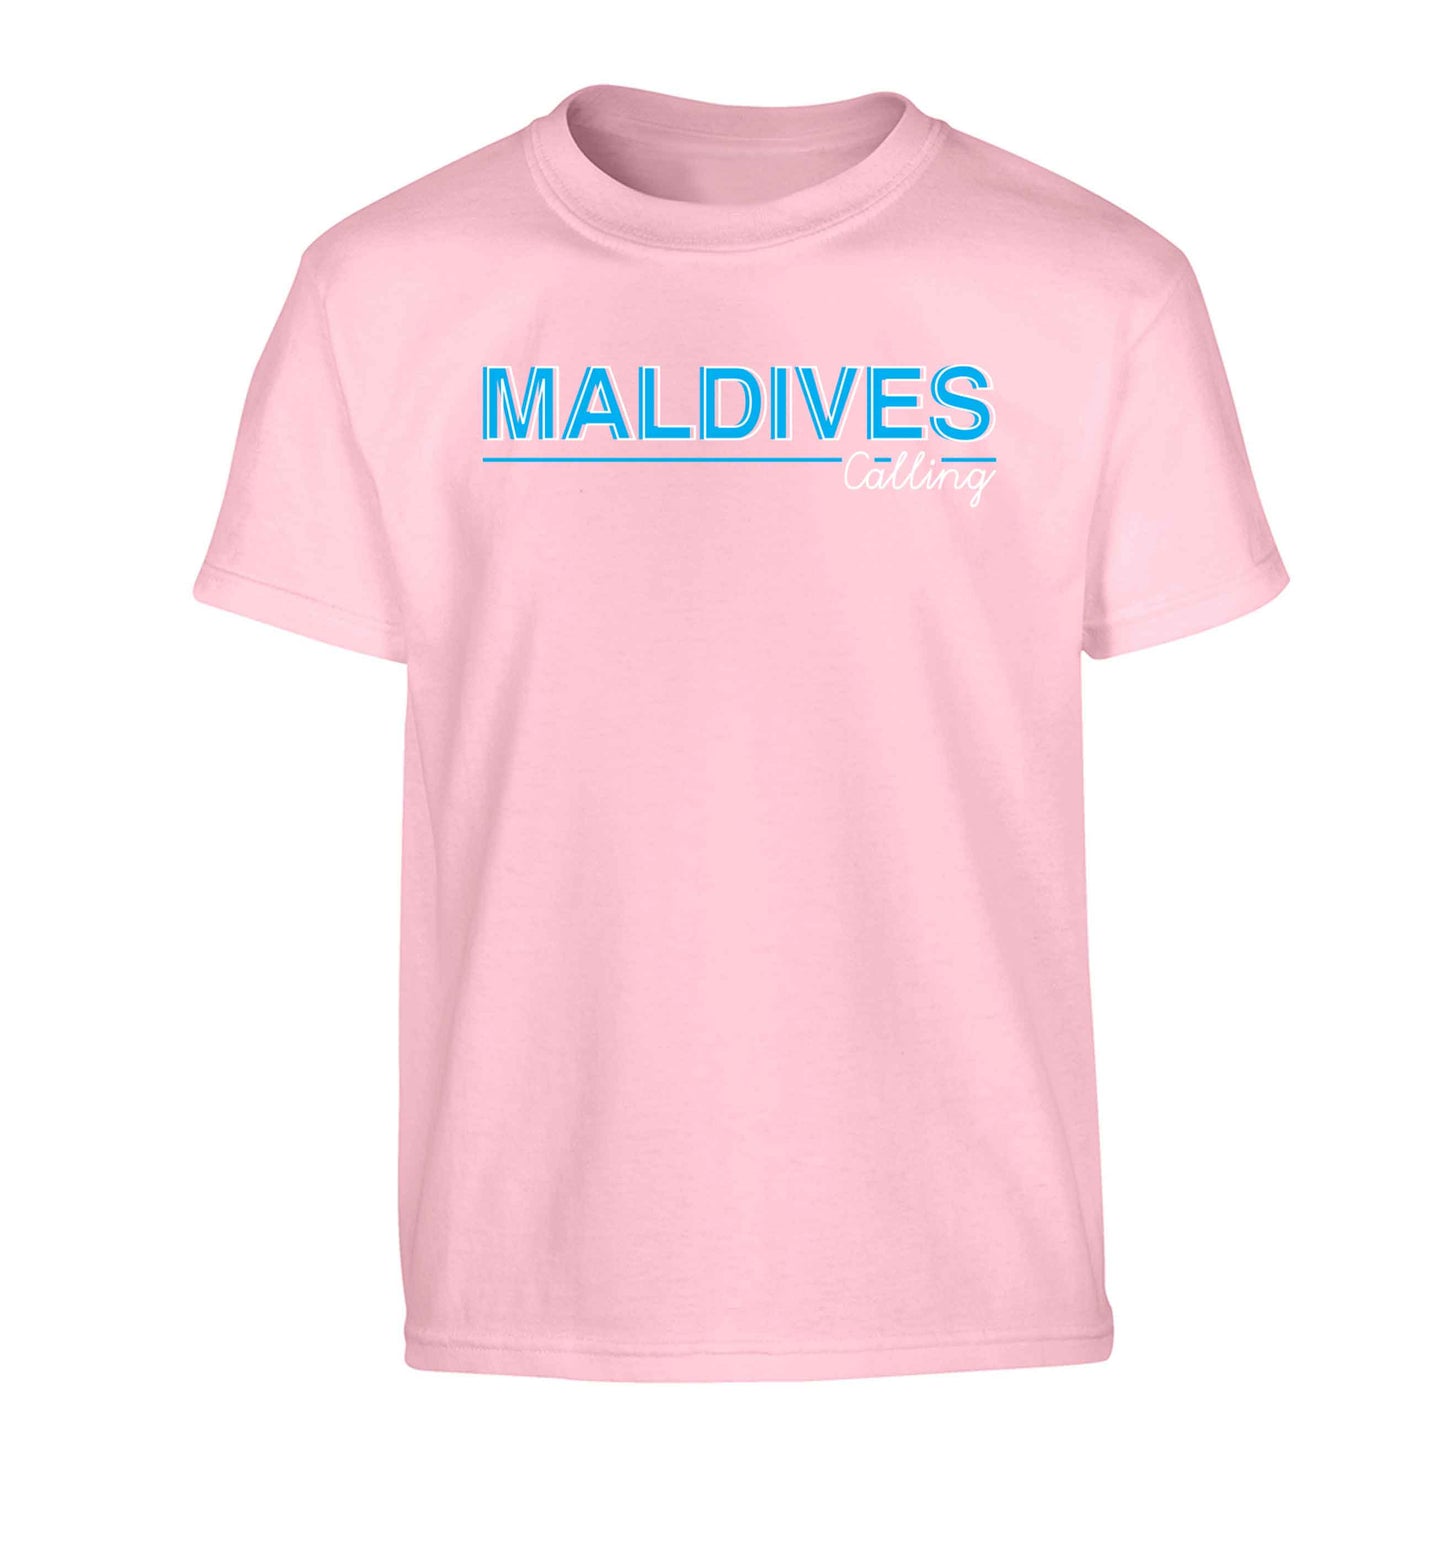 Maldives calling Children's light pink Tshirt 12-13 Years